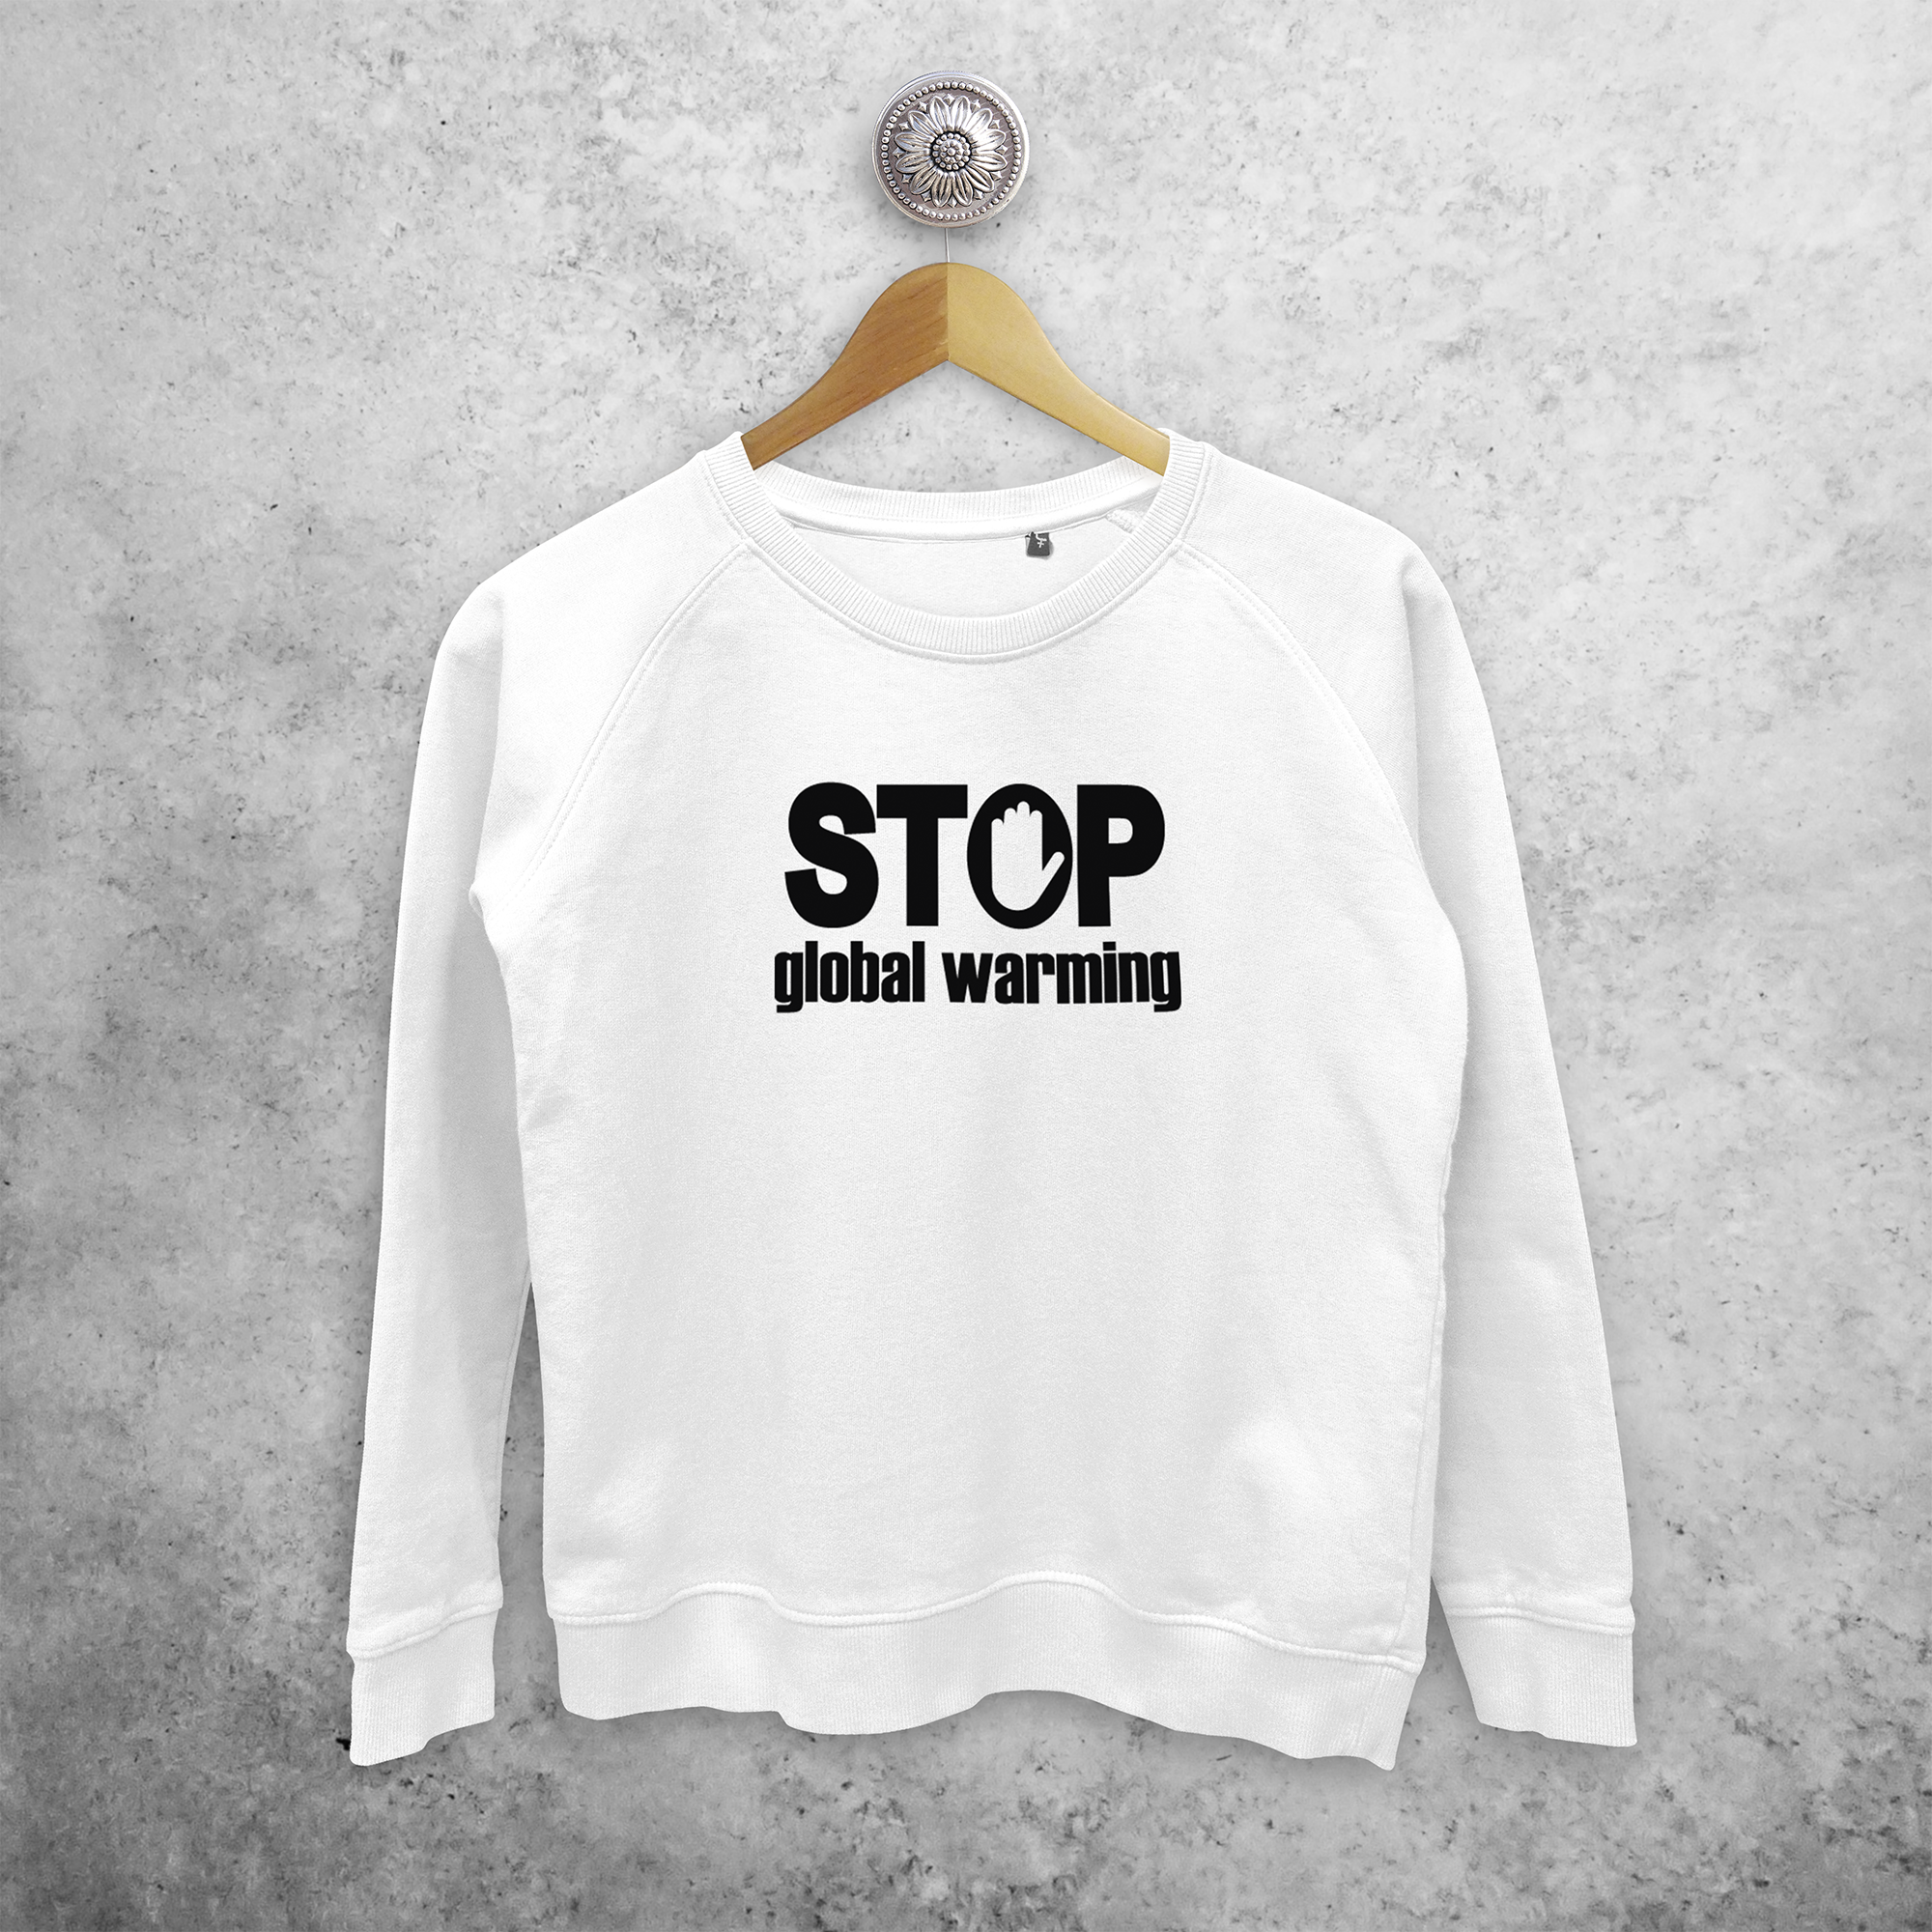 'Stop global warming' sweater